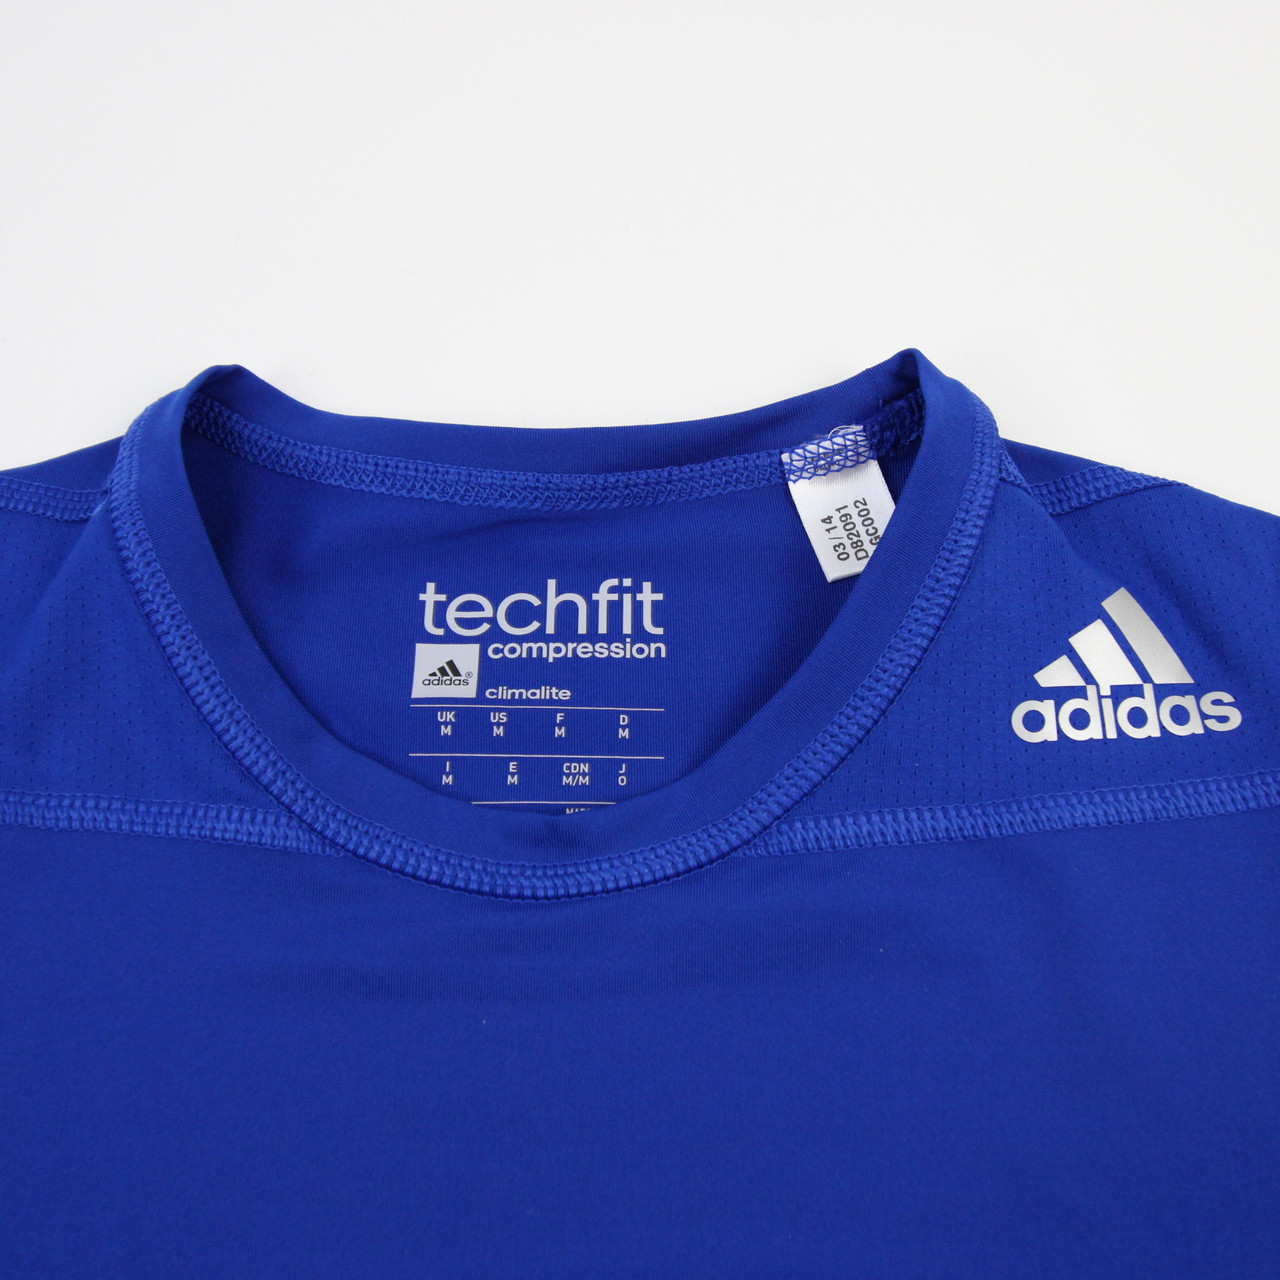 Adidas Techfit compression climalite shirt, Men's Fashion